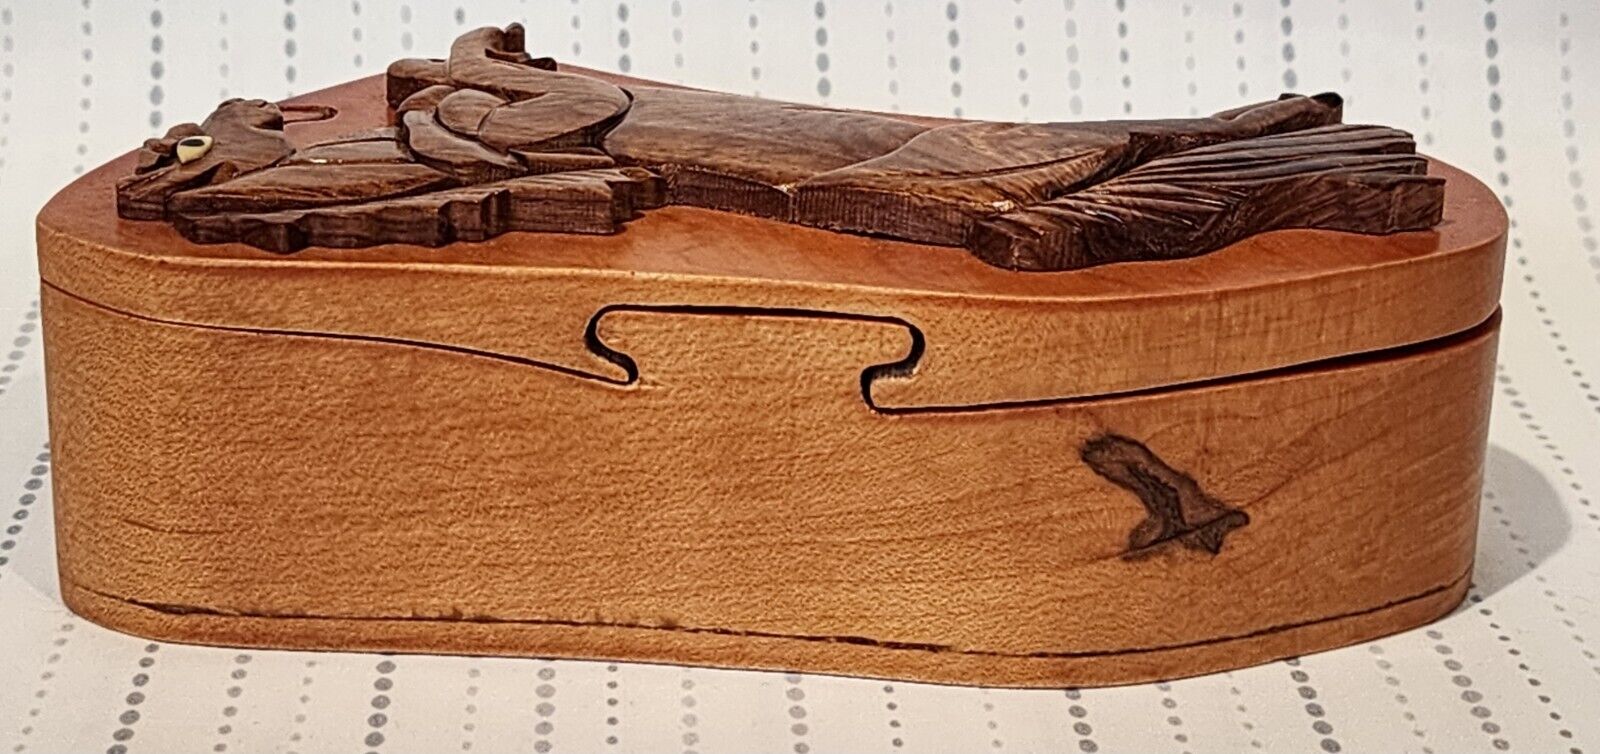 Handcrafted Intarsia Wood Art Horse Puzzle Box Jewelry Trinket Box Collectible Без бренда - фотография #6